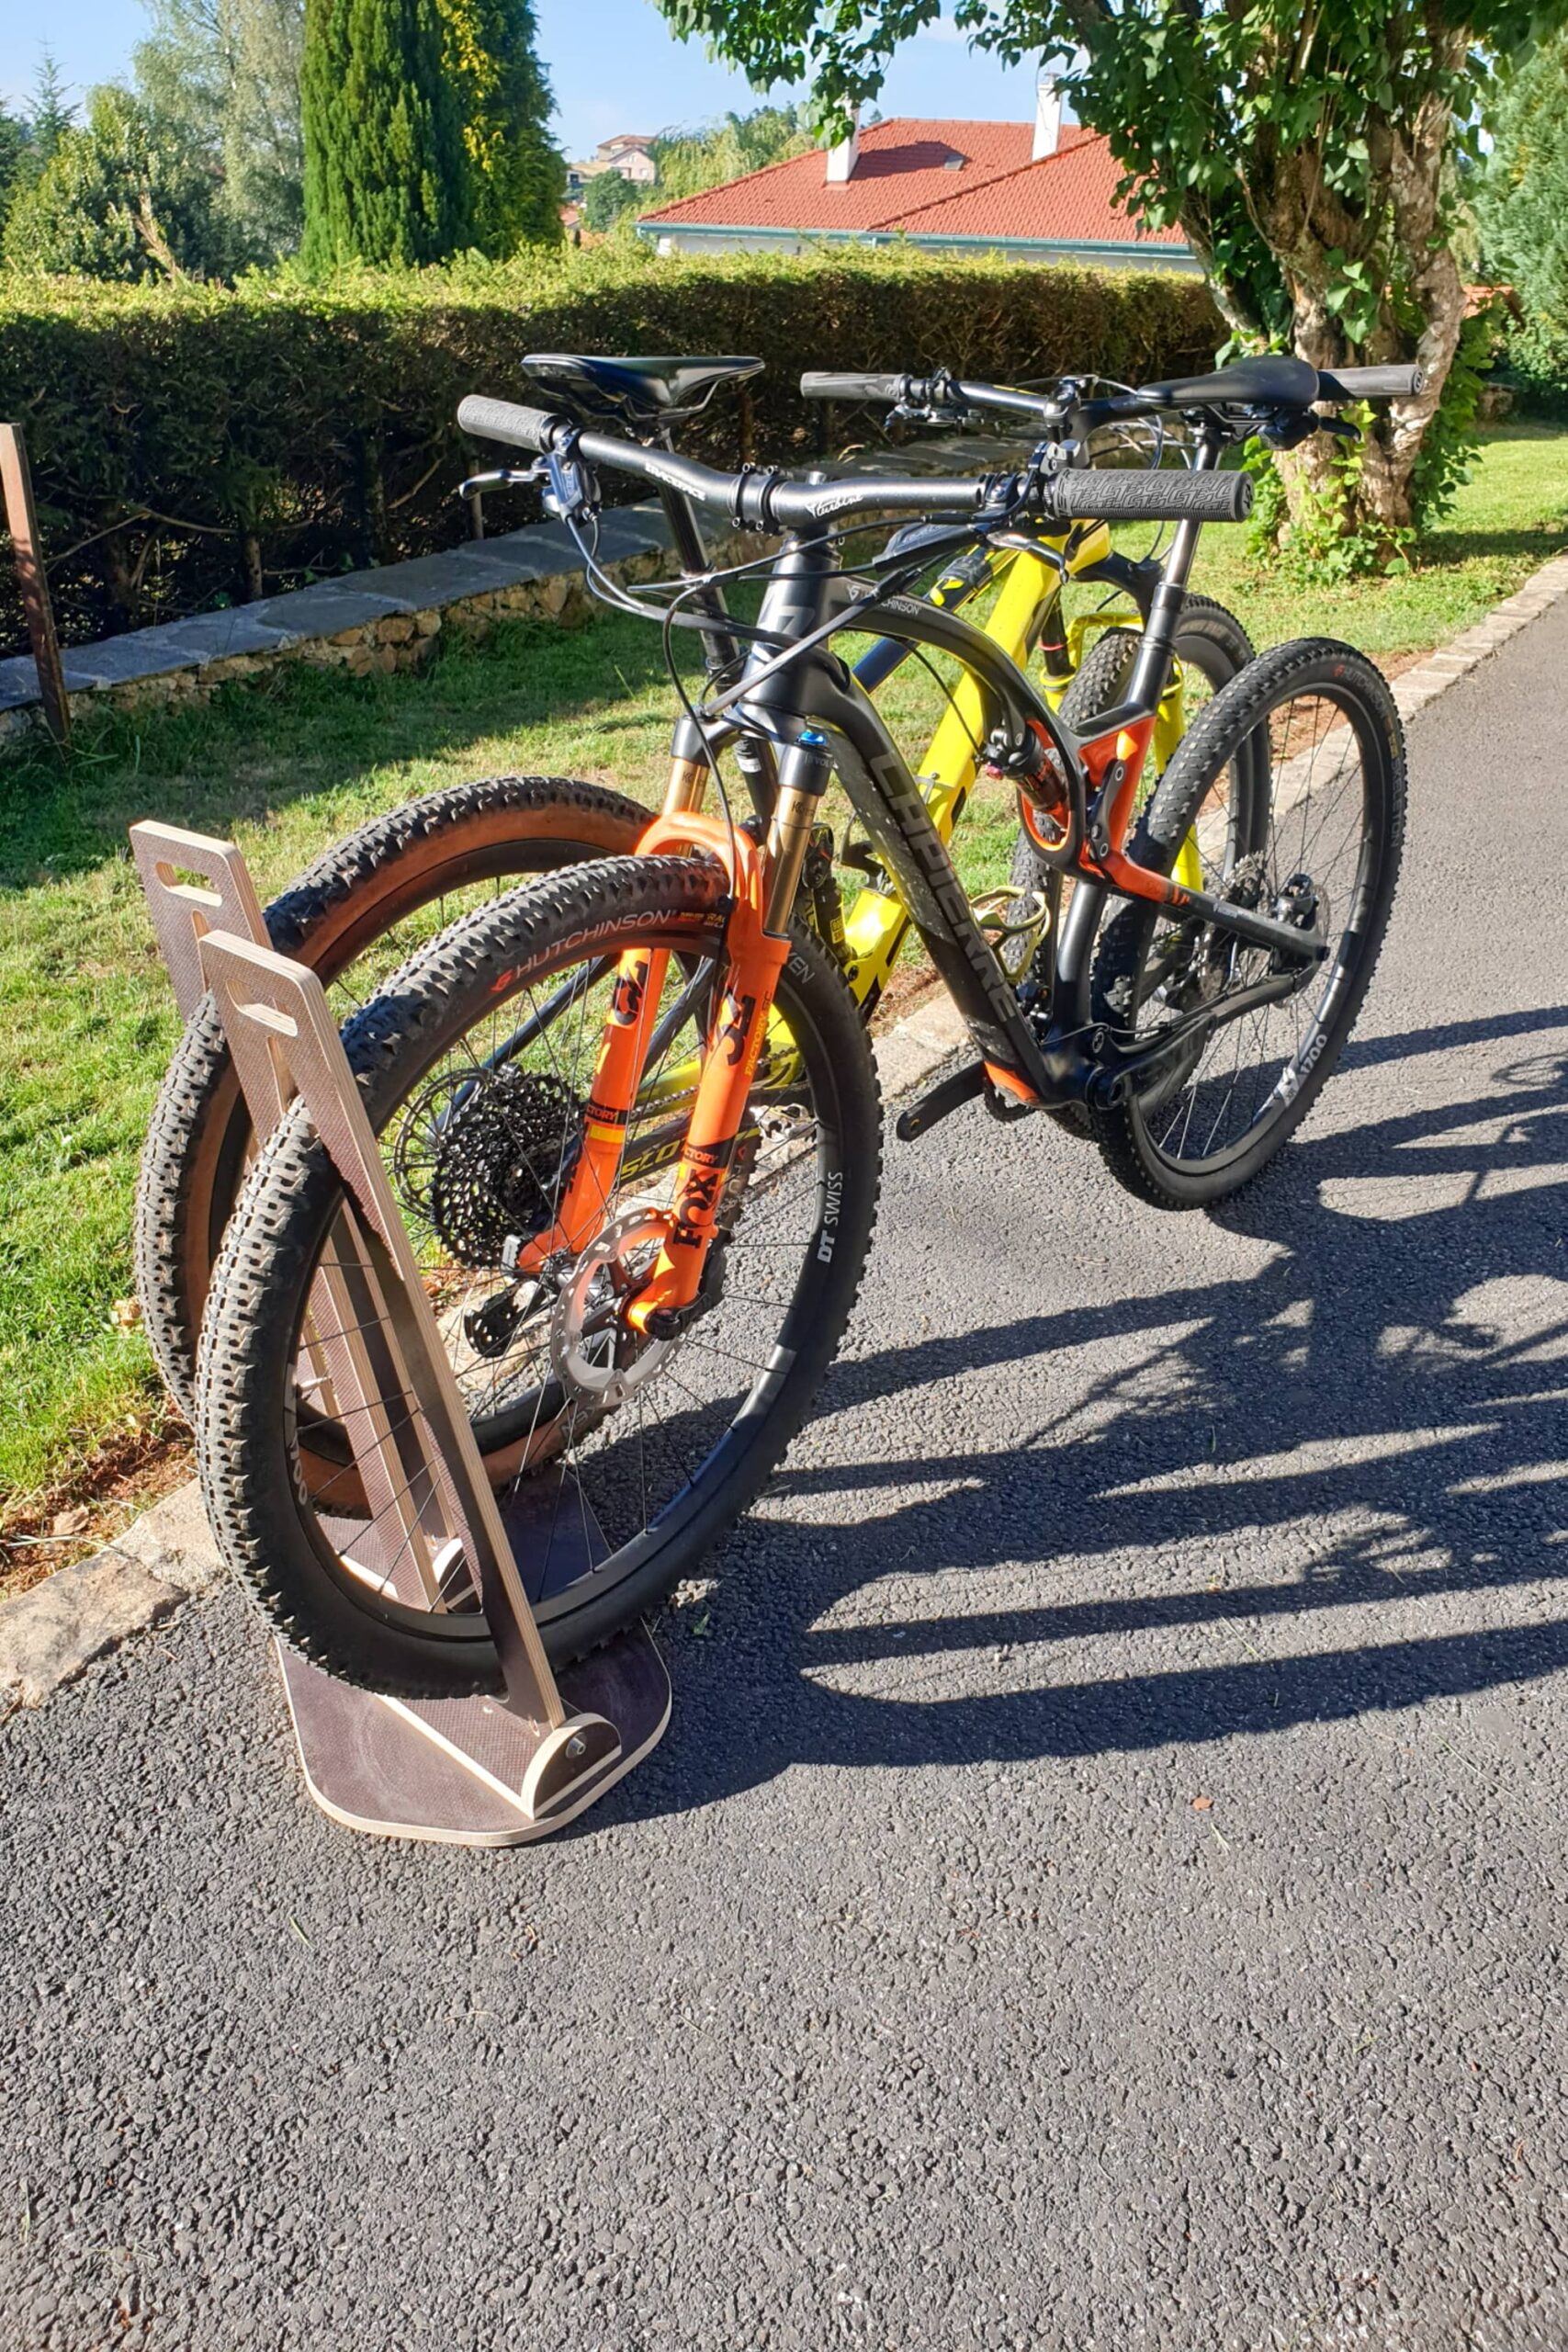 Porte vélo fourgon avec support fixation plancher